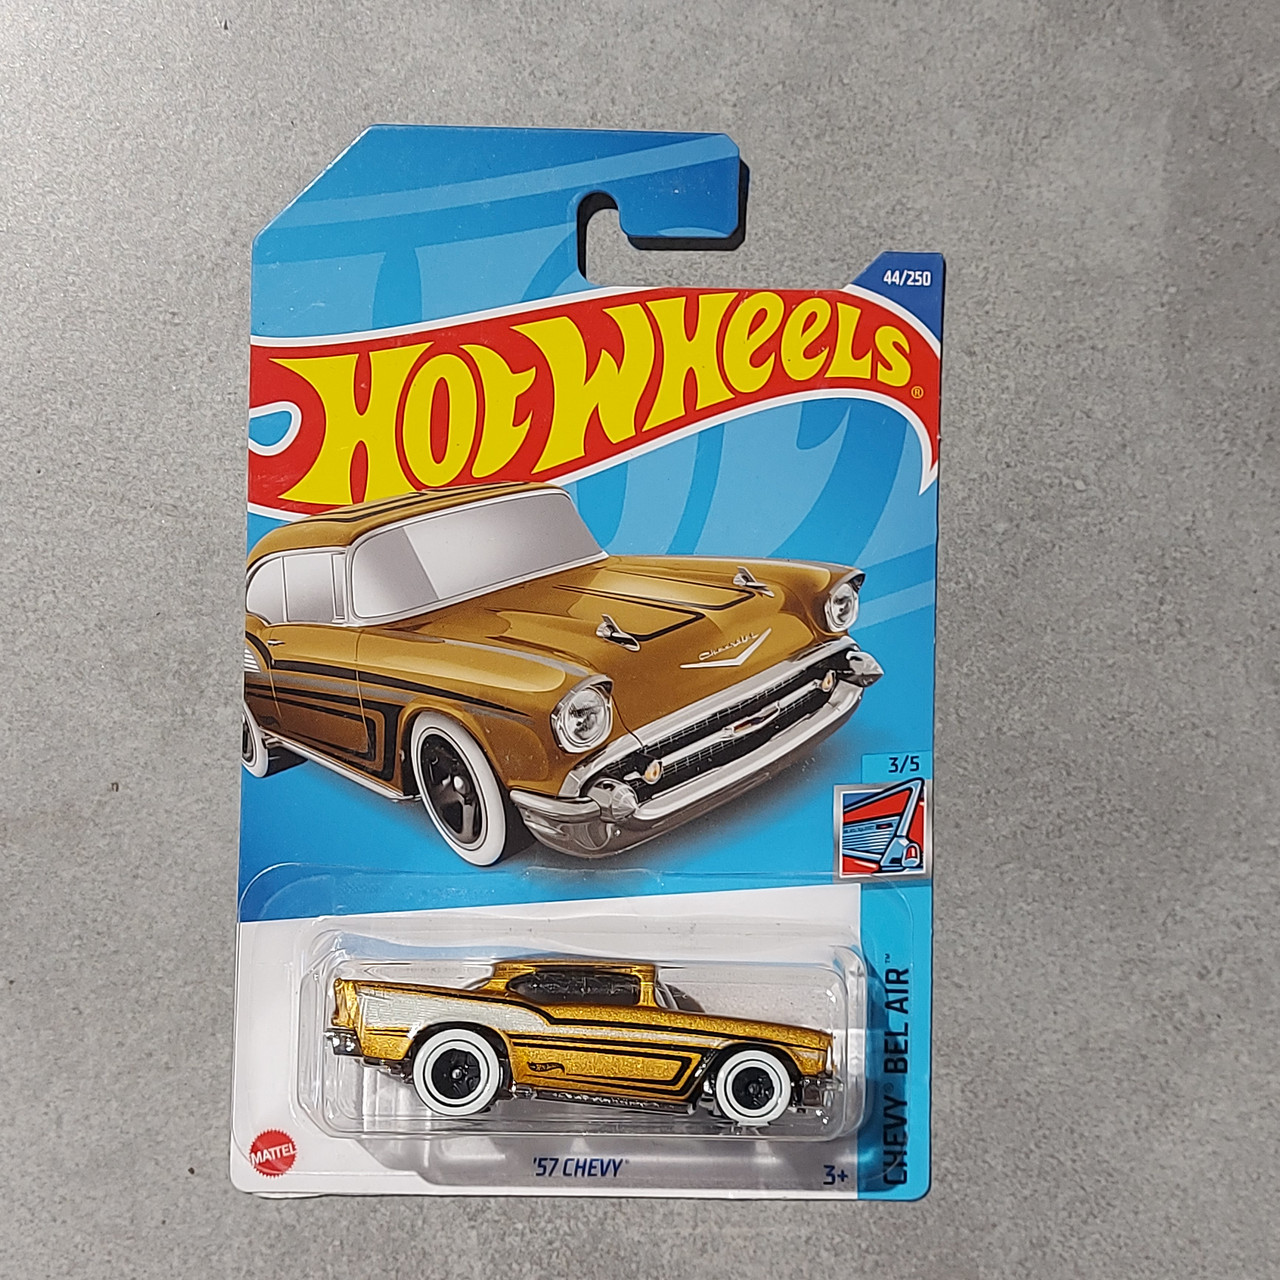 Оригинальная Машинка "Hot wheels" '57 CHEVY. BEL AIR. Mattel. 44/250. Хотвилс. Машинки. Подарок.